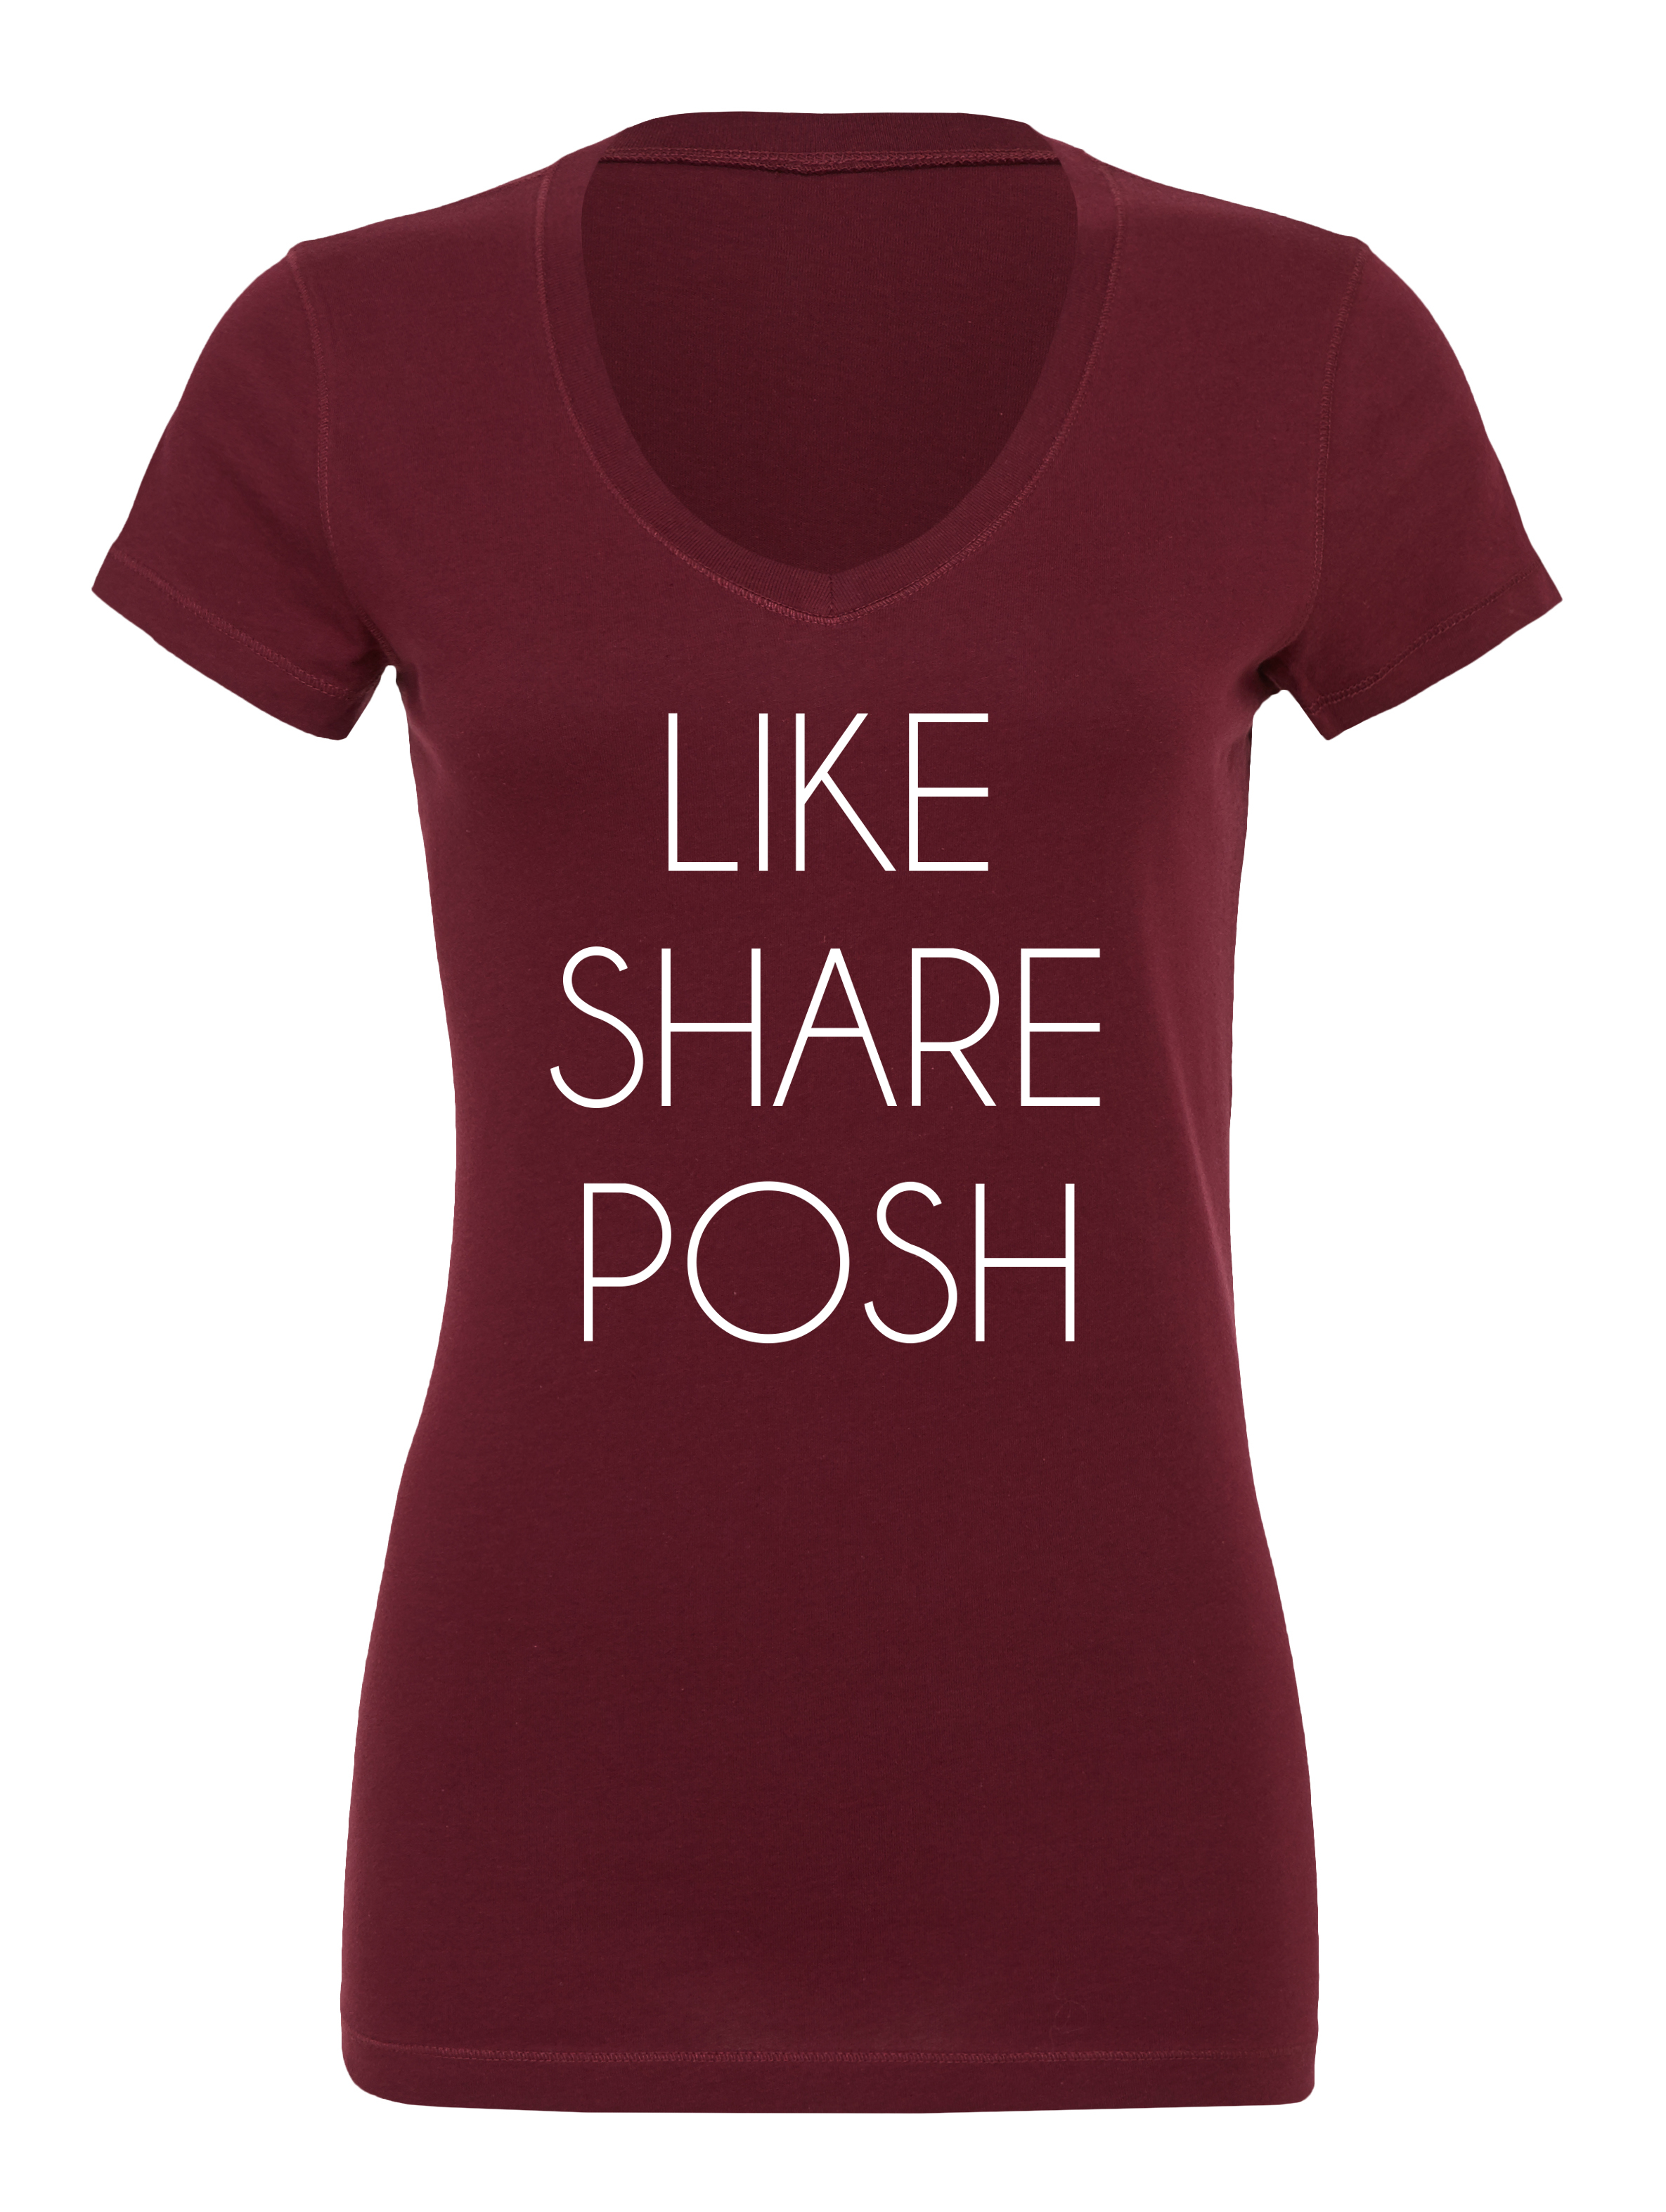 Like Share Posh tee shirt